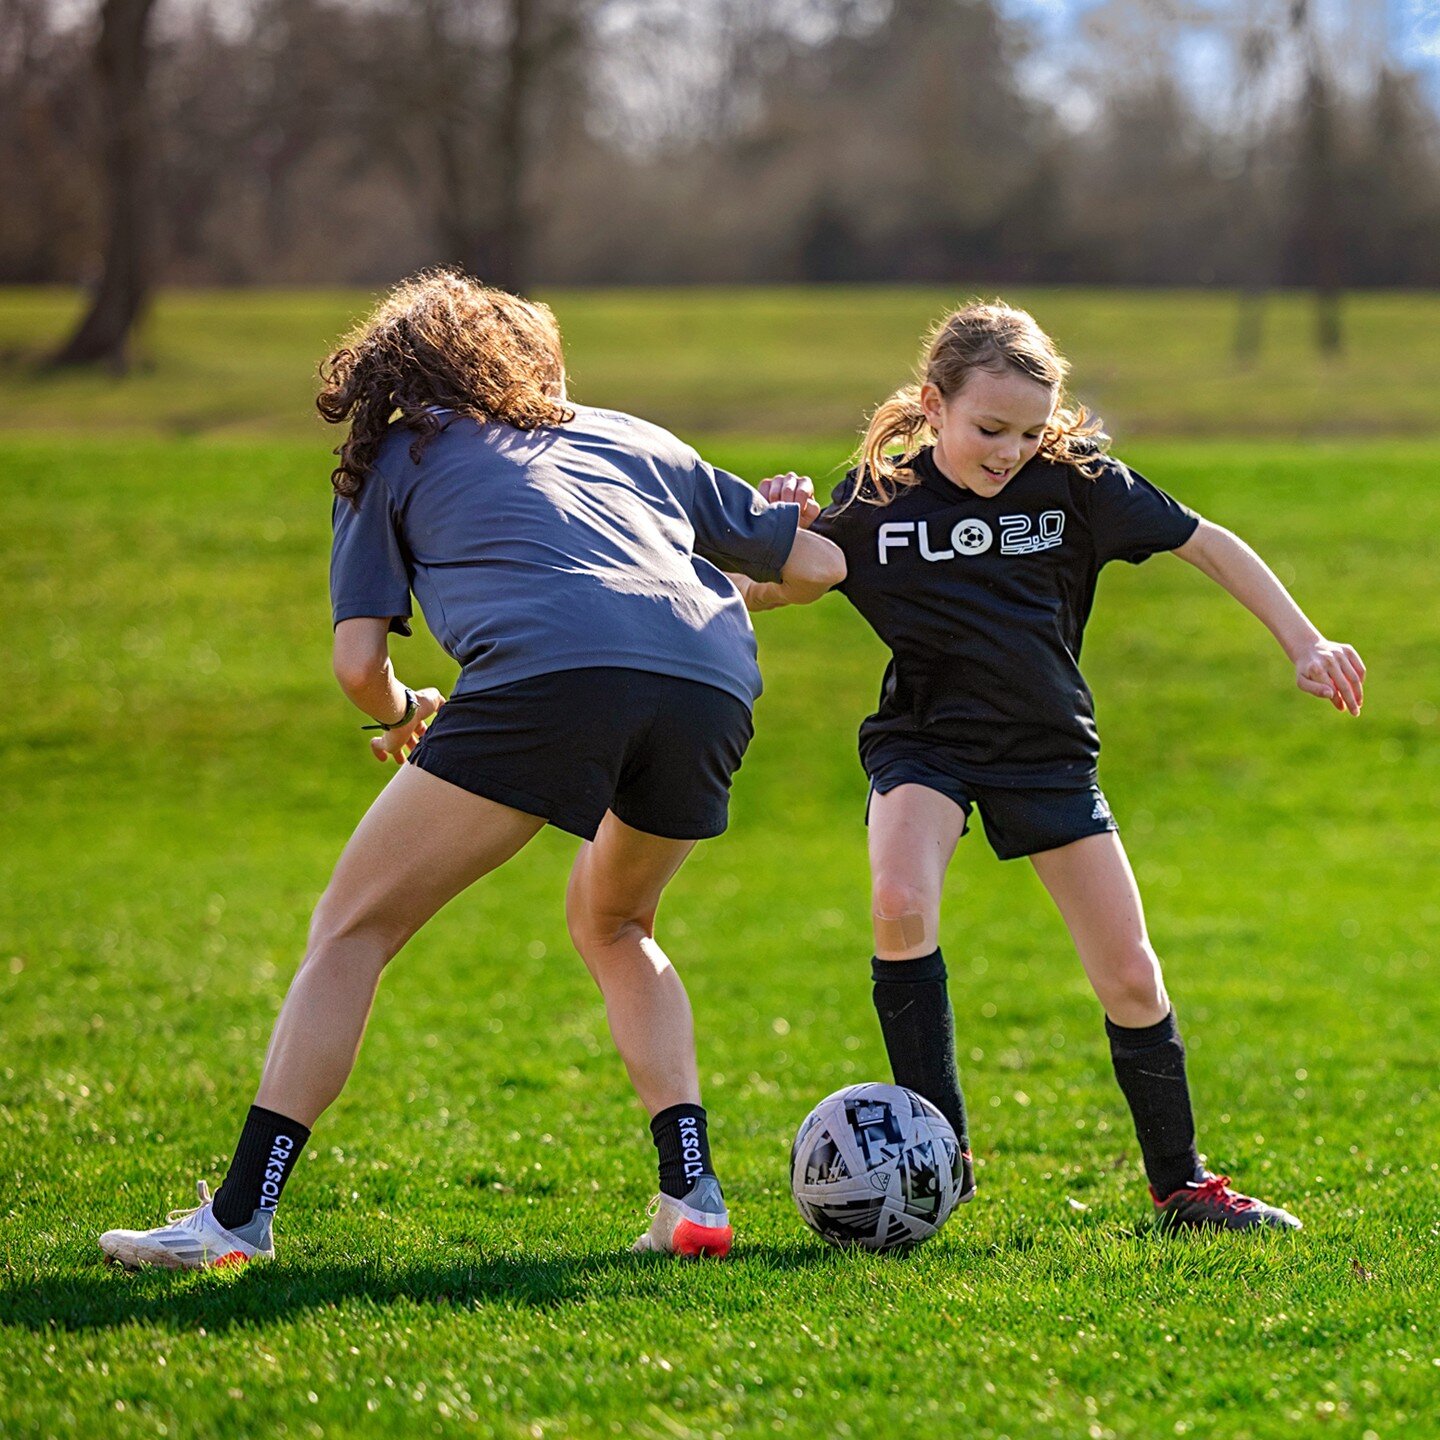 Practicing one-on-one's 
#soccerpractice #njsoccerphotography #oneonone #flo2.0